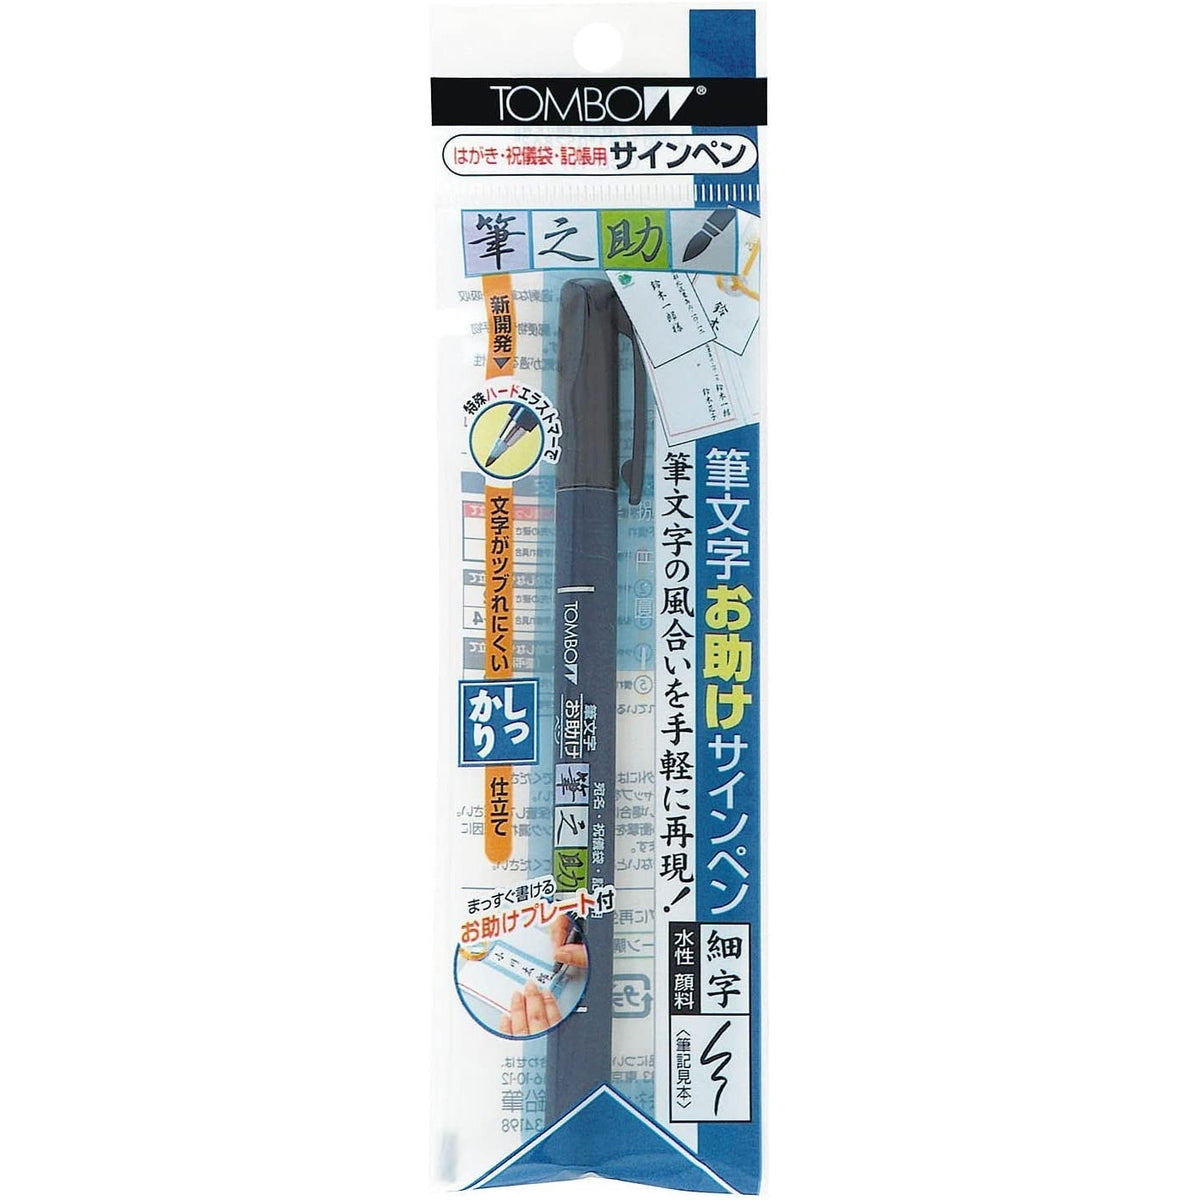 Tombow Fudenosuke Water Based Calligraphy Pen Hard Tip – Japanese Taste